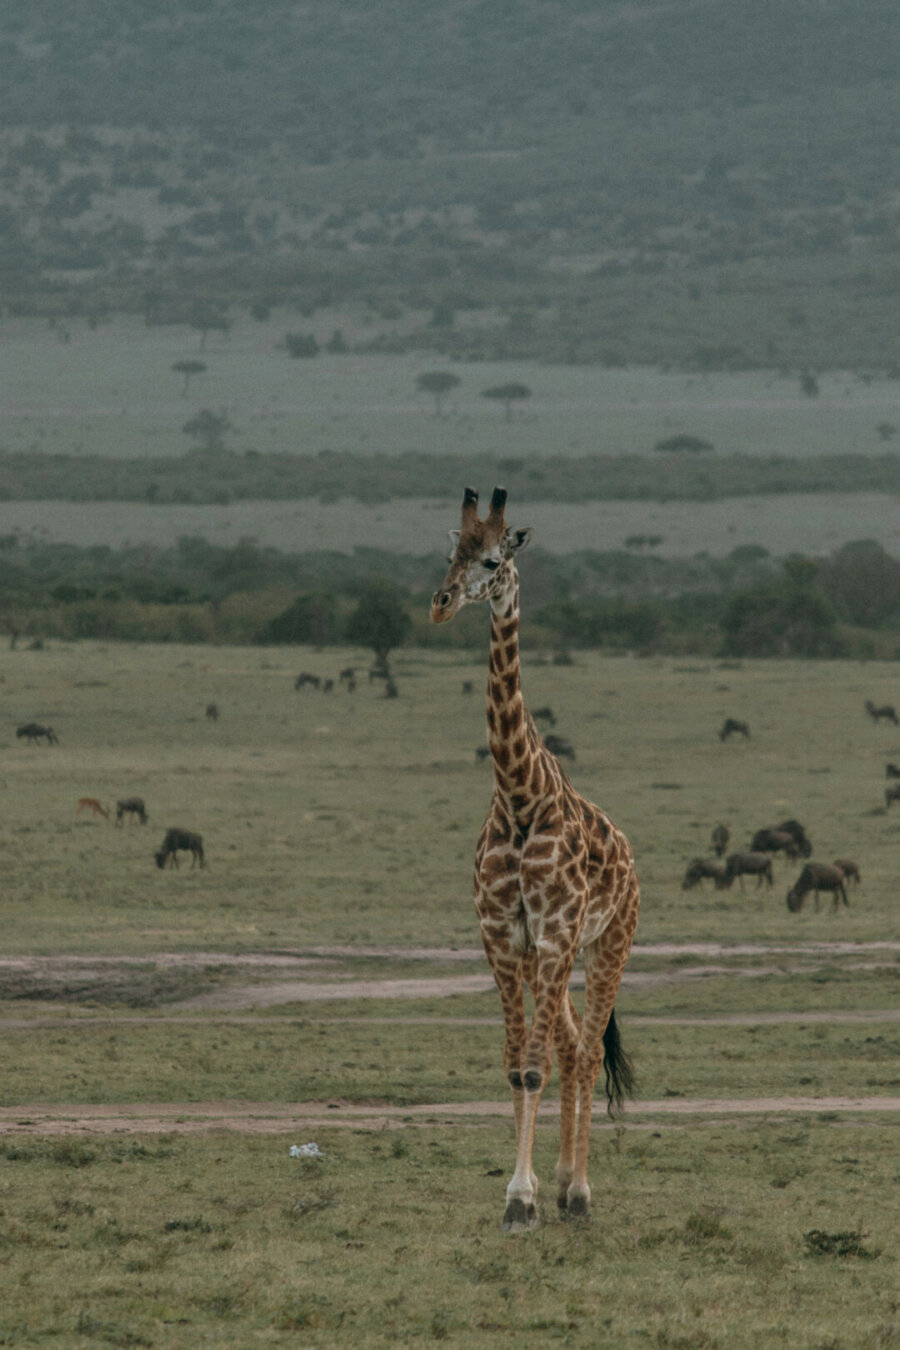 A giraffe walking in the reserve